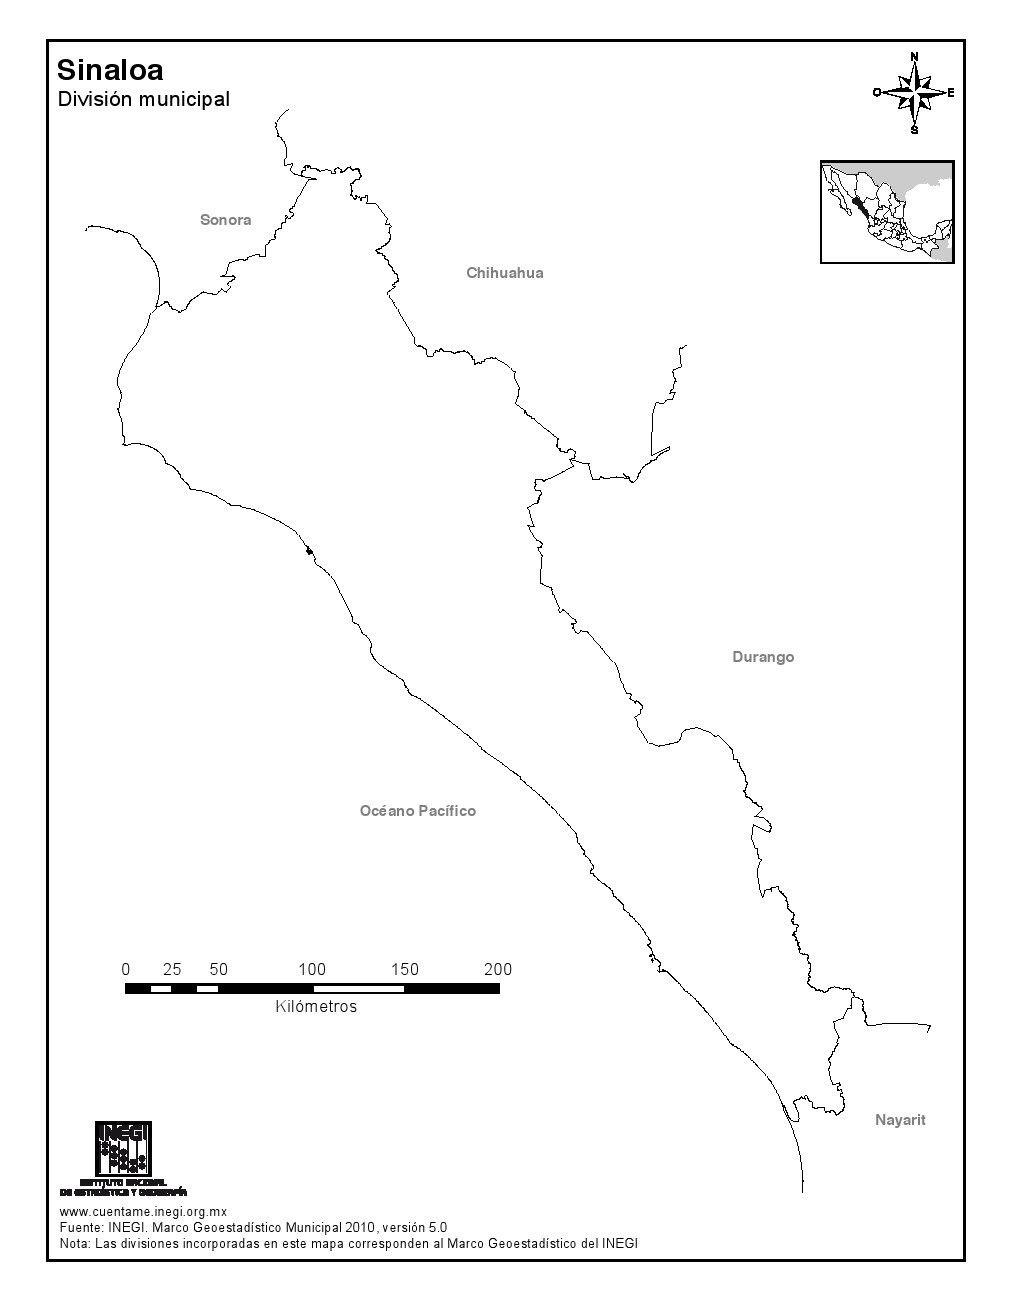 Mapa mudo de Sinaloa. INEGI de México